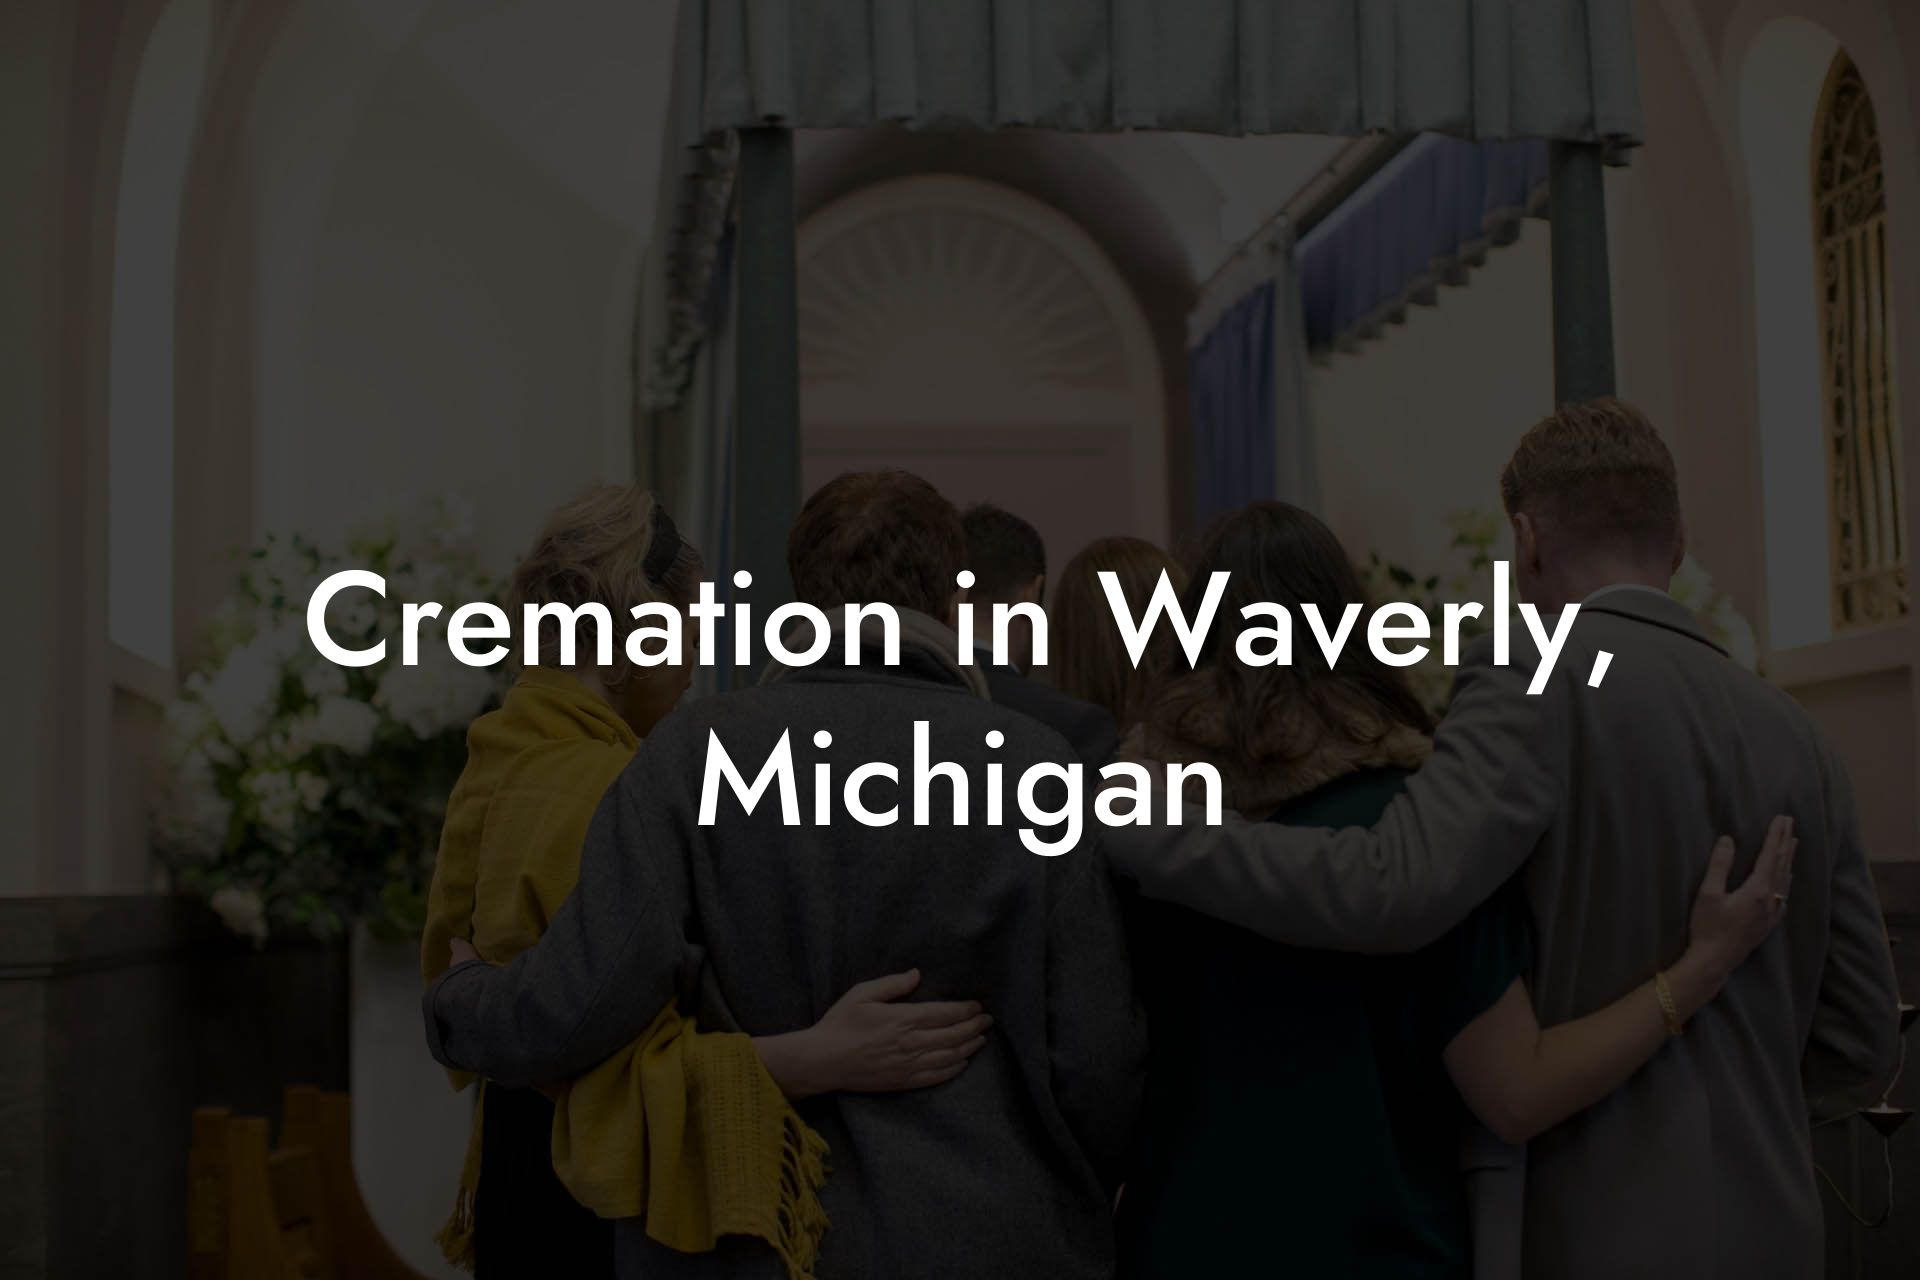 Cremation in Waverly, Michigan